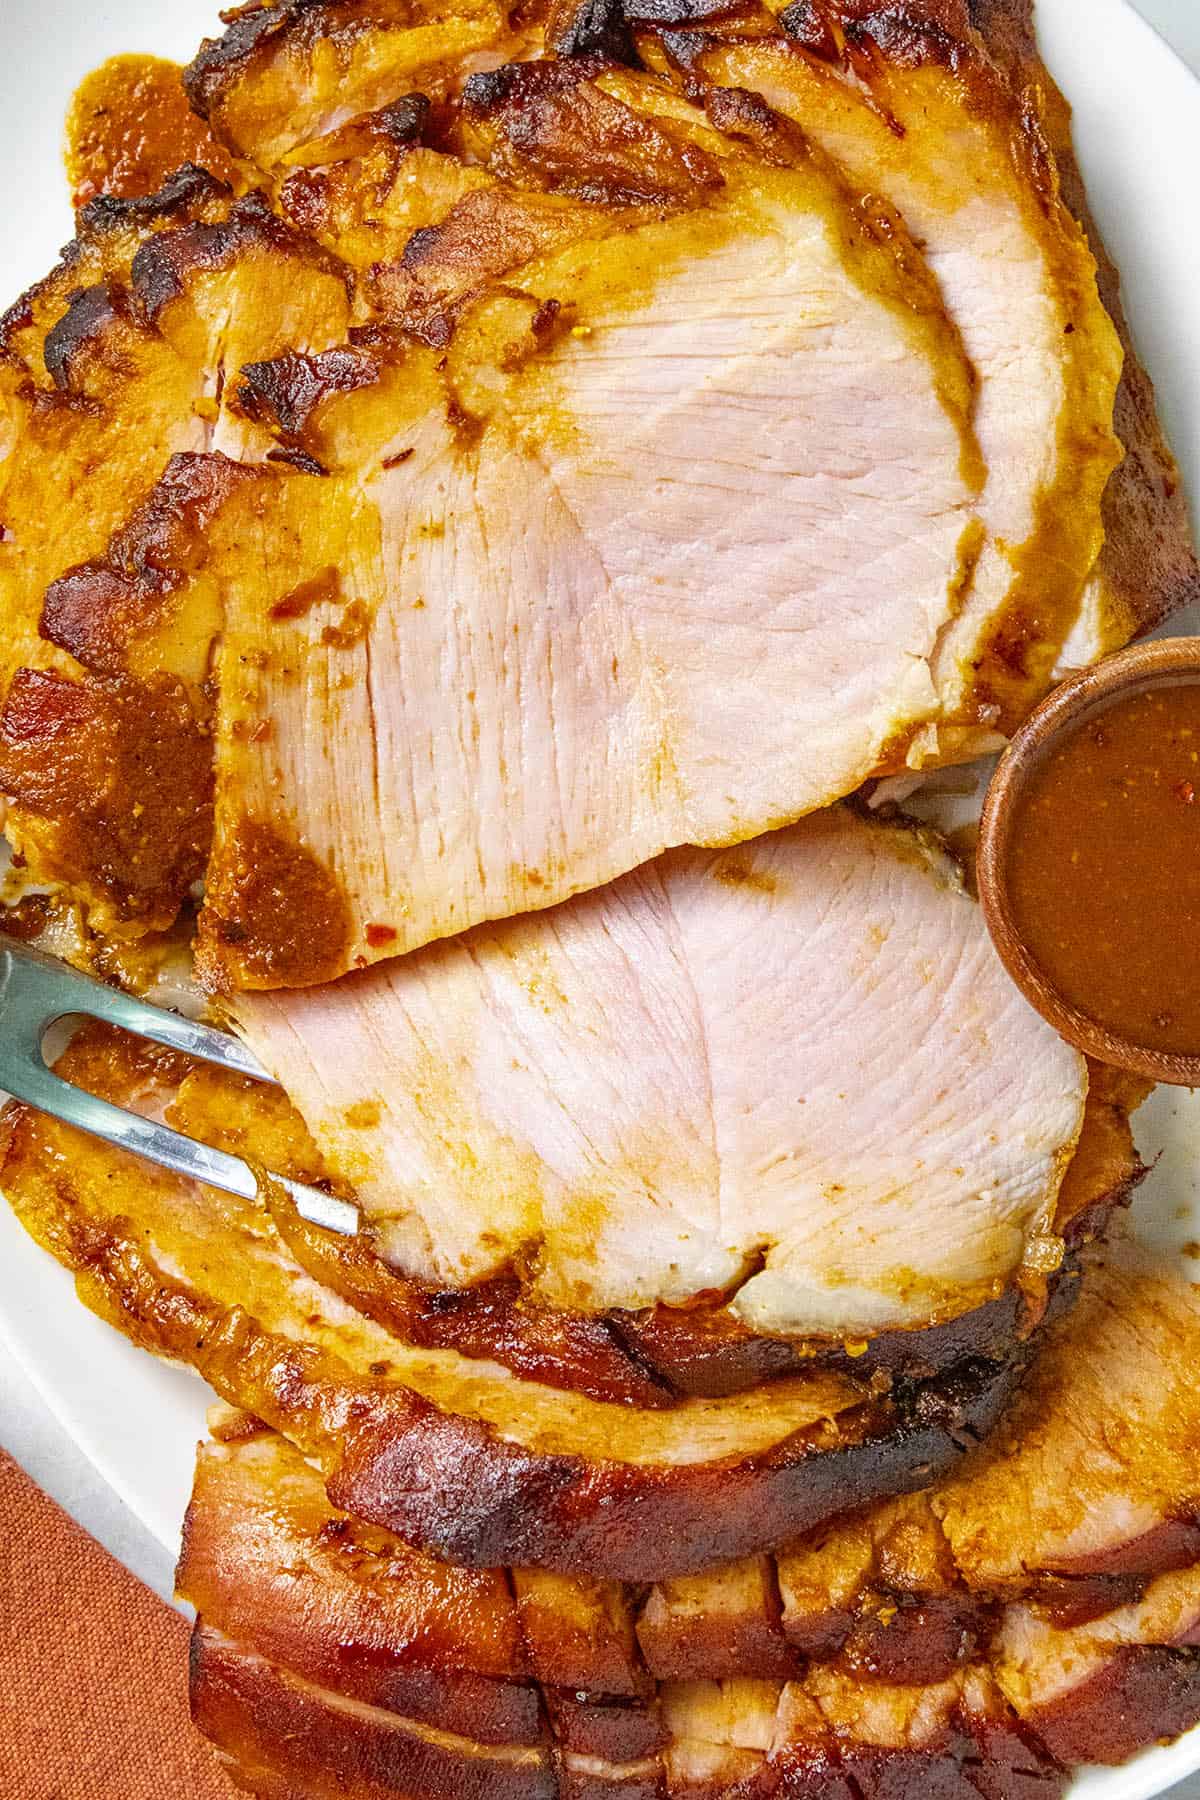 Sliced Chipotle-Honey Glazed ham on a plate